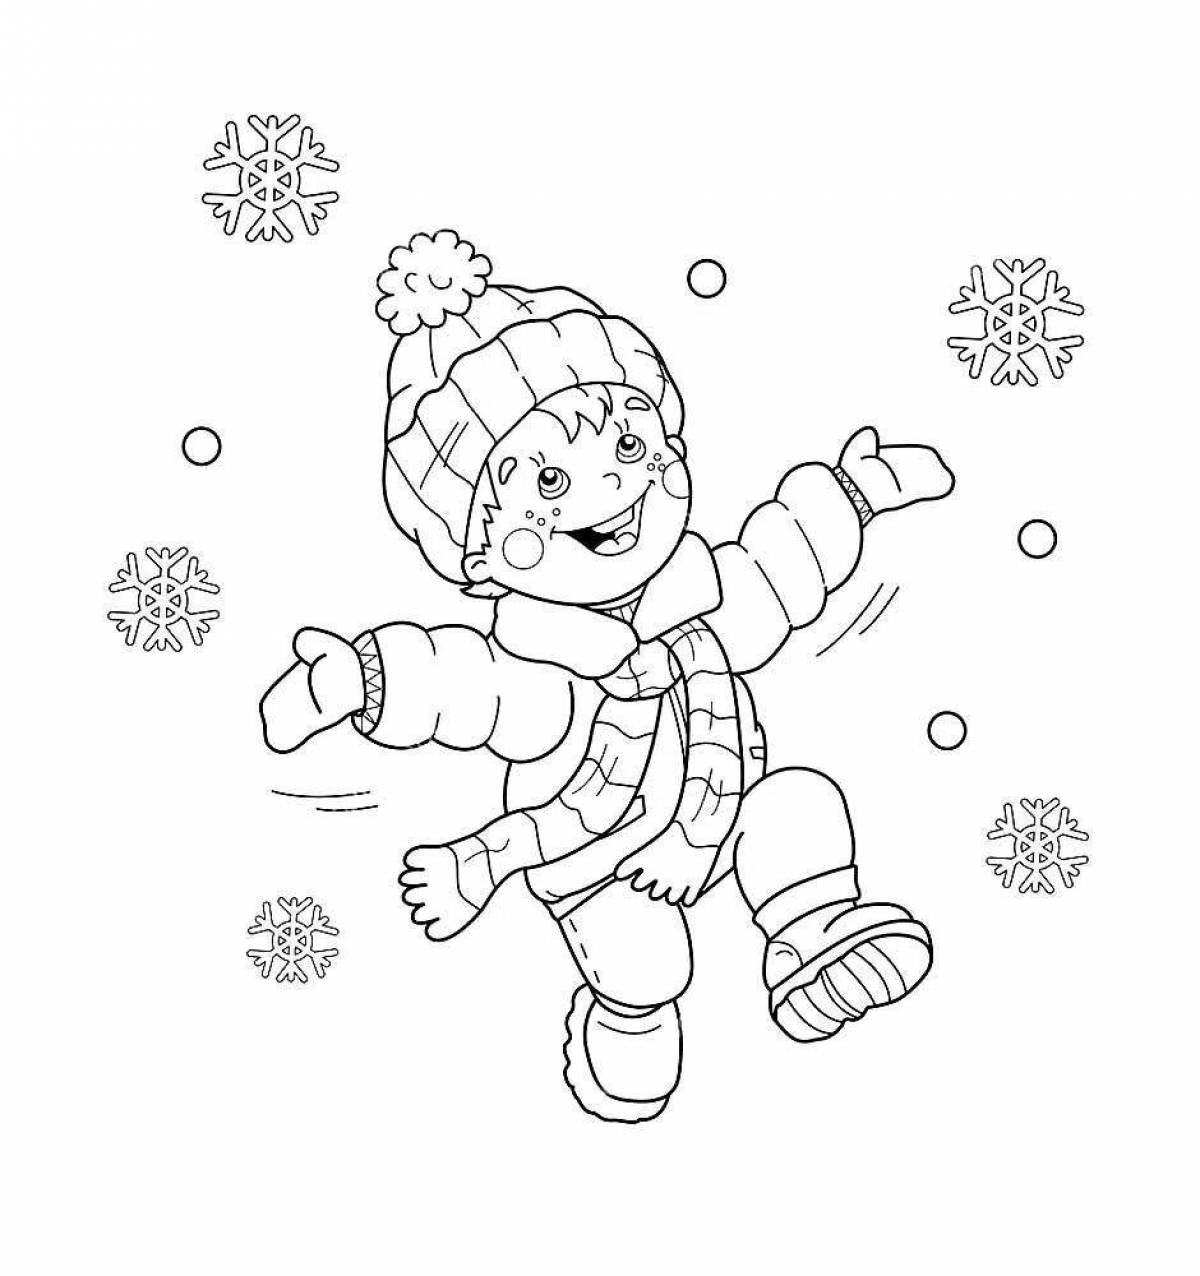 Violent coloring boy in winter clothes